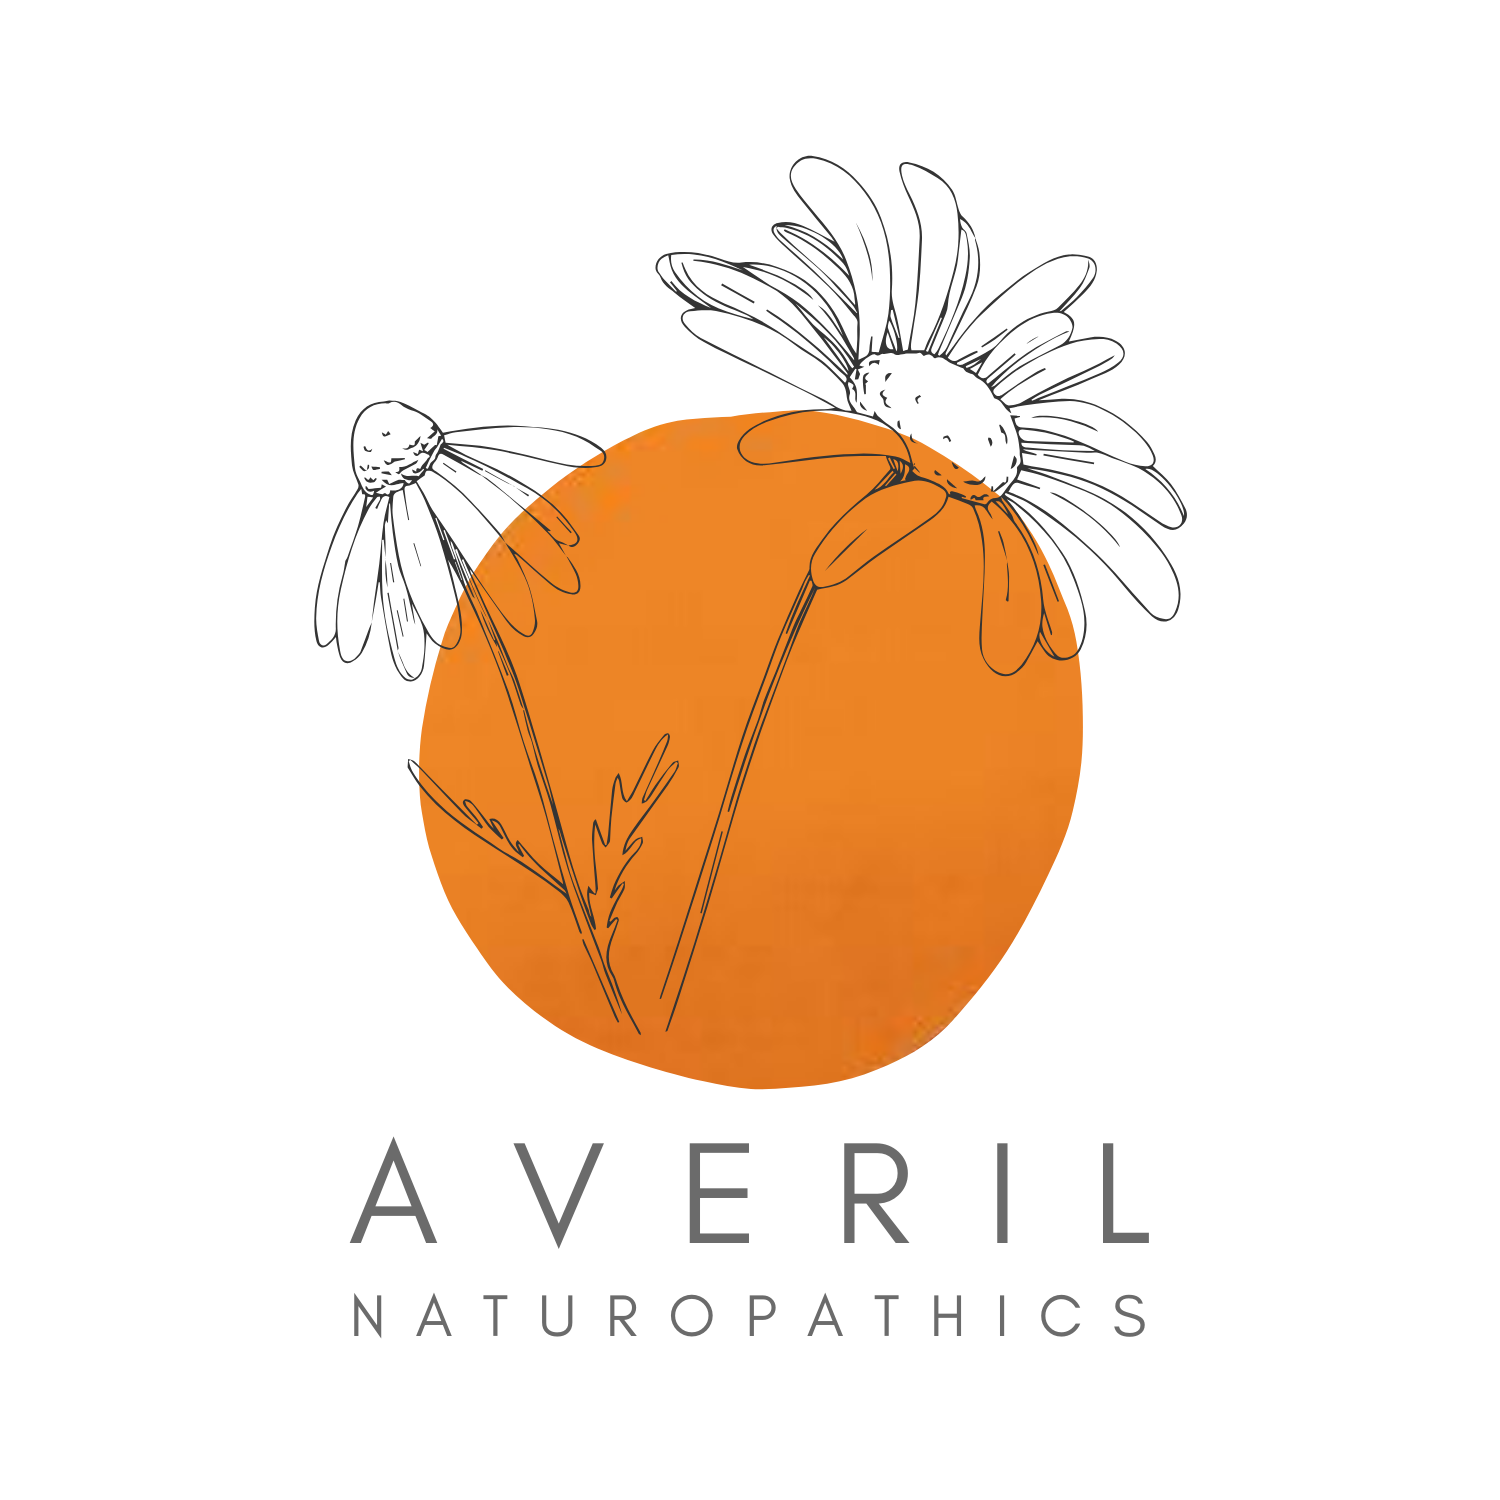 Averil Naturopathics